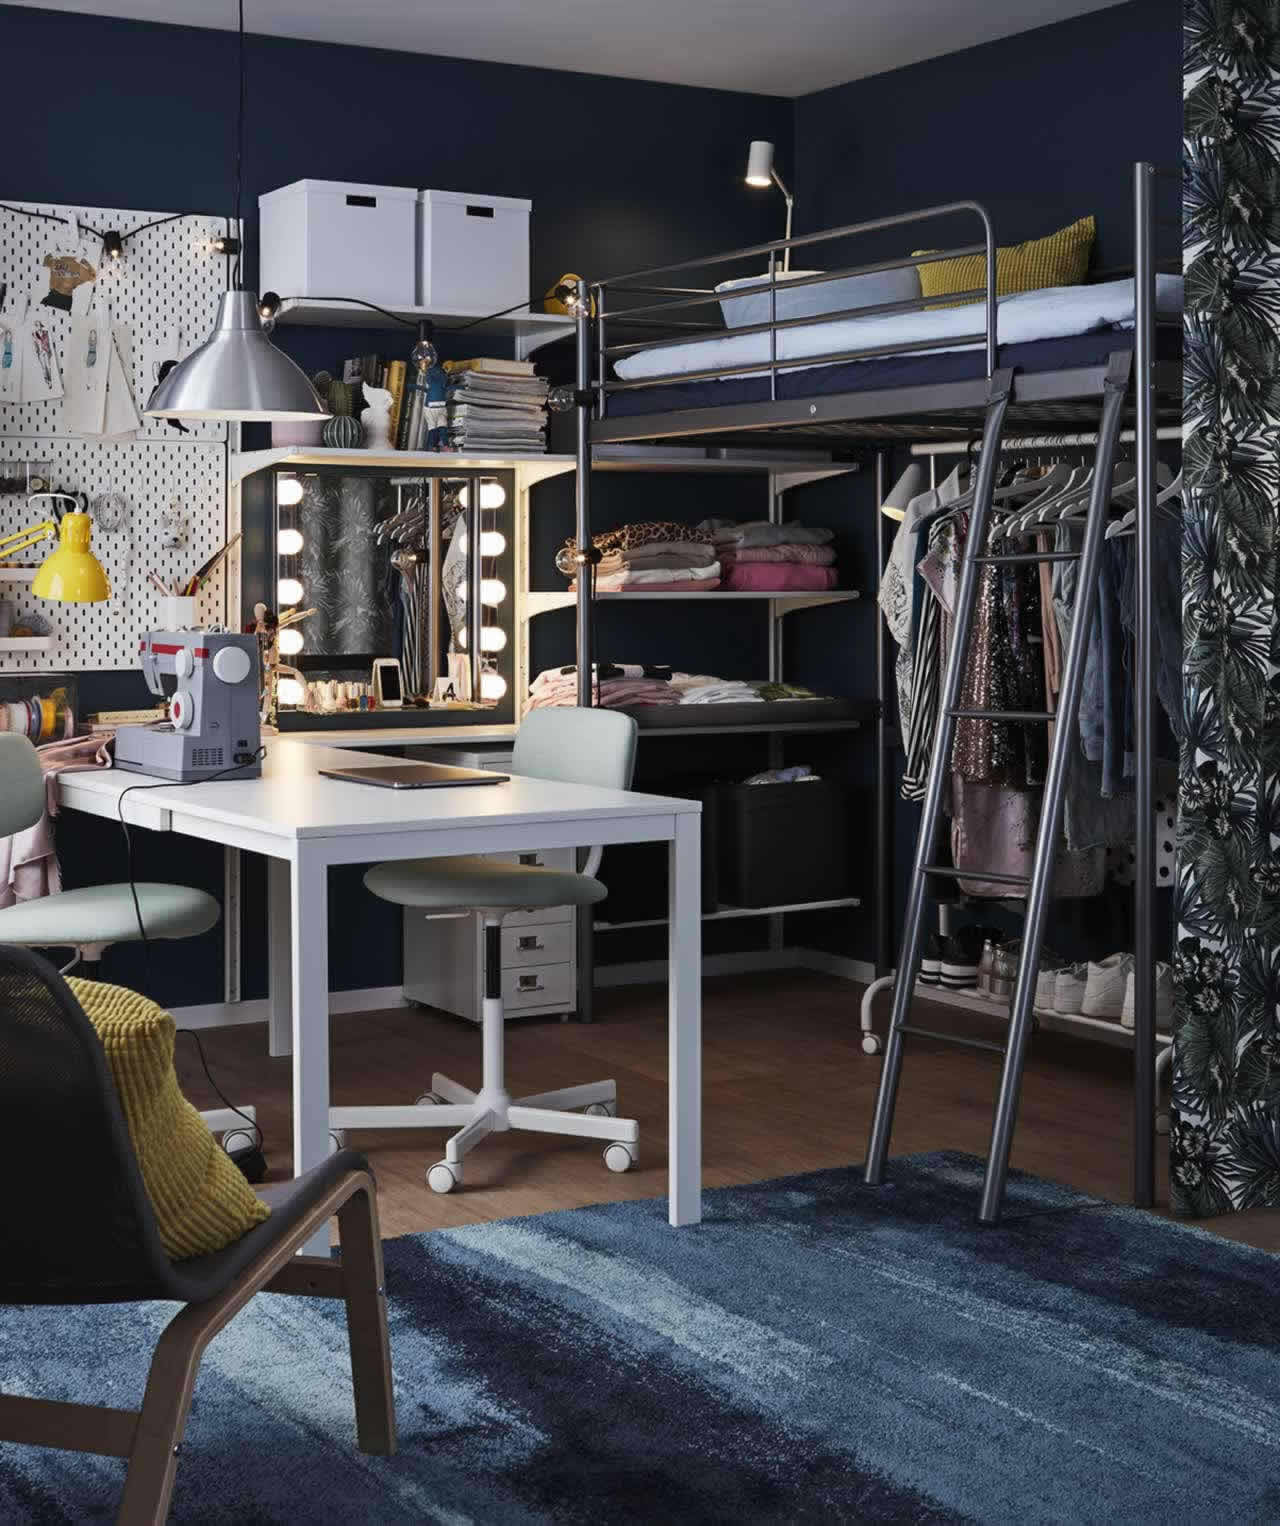 IKEA Ideas - A room fit for a teenage fashionista